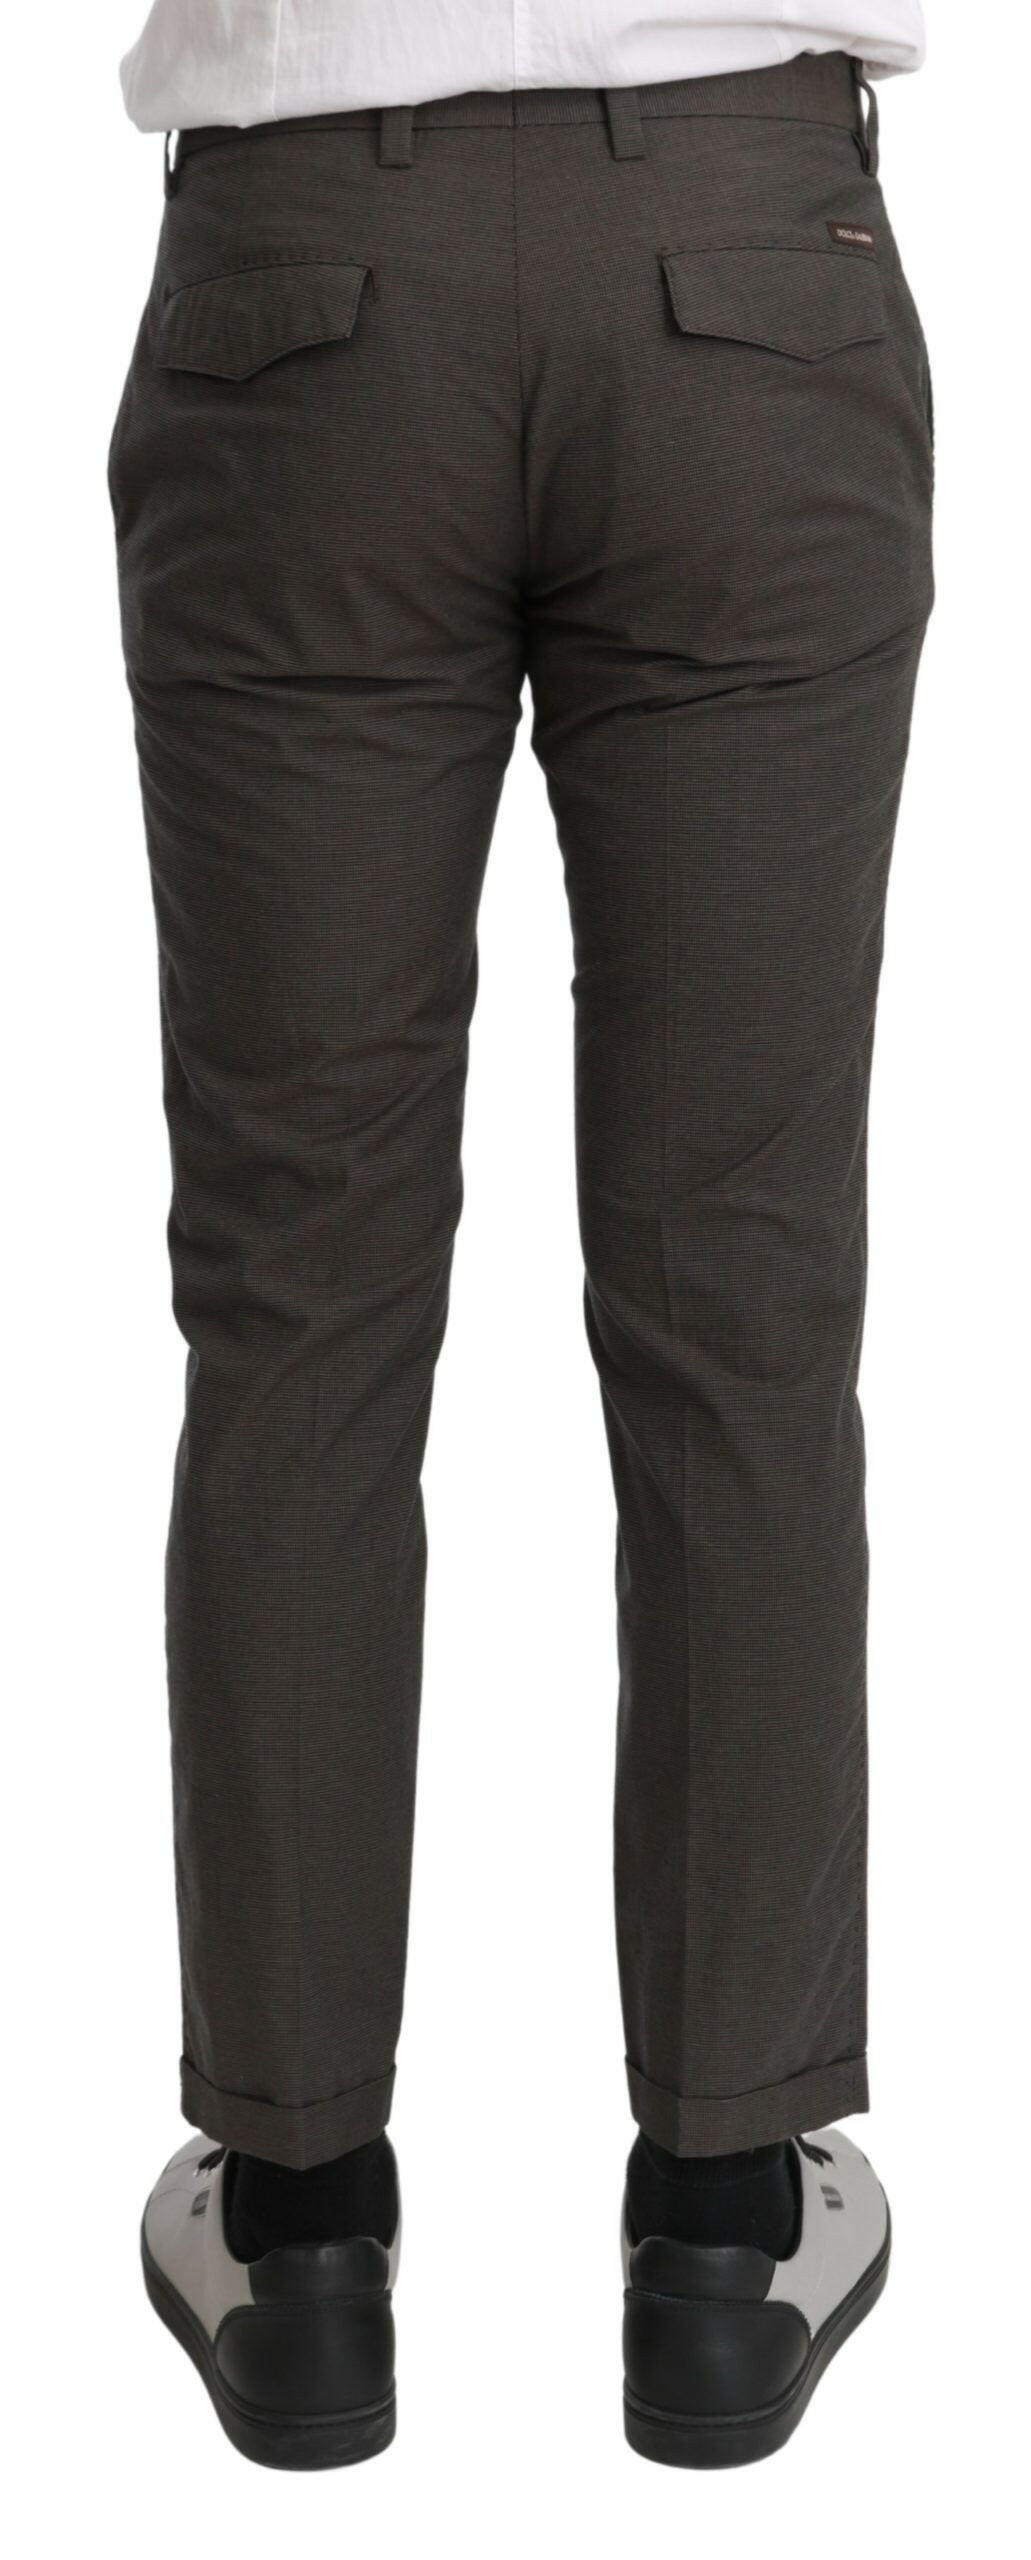 Dolce & Gabbana Brown Casual Mens Trouser 100% Cotton Pants - GENUINE AUTHENTIC BRAND LLC  